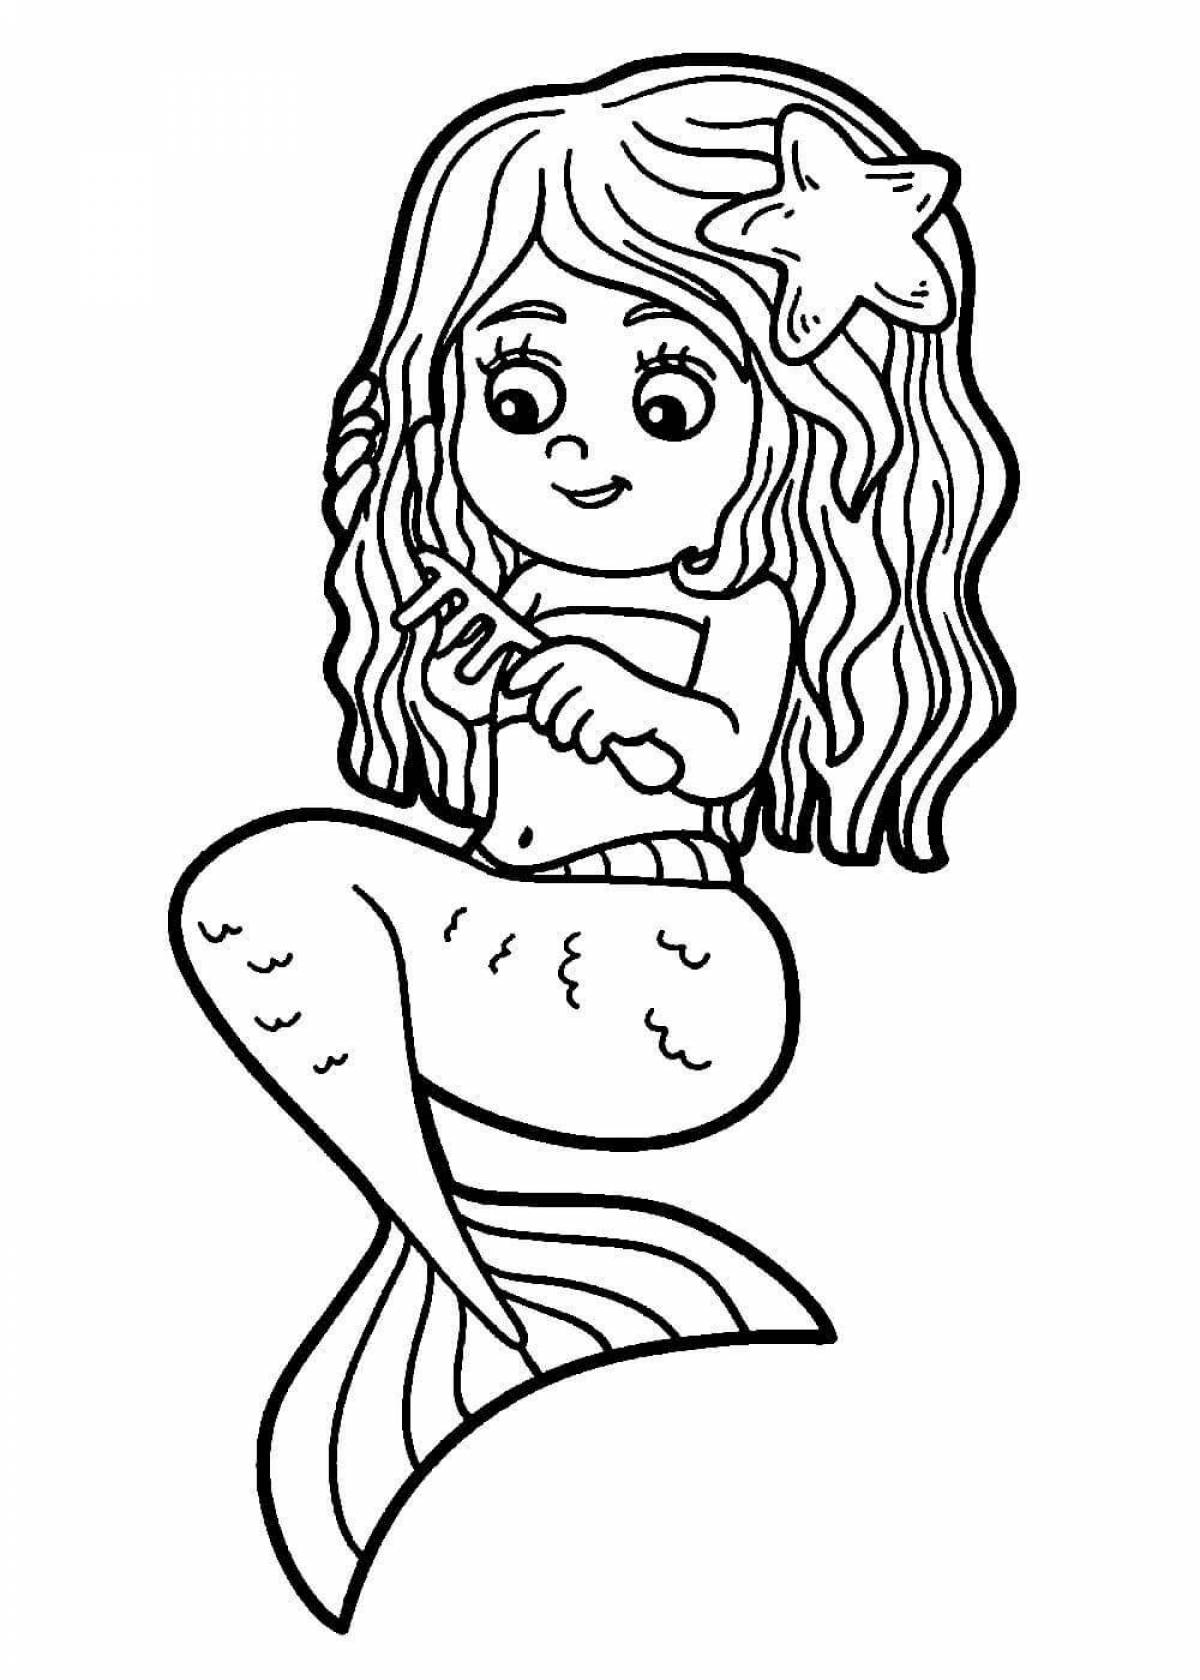 Mystical mermaid coloring book for kids